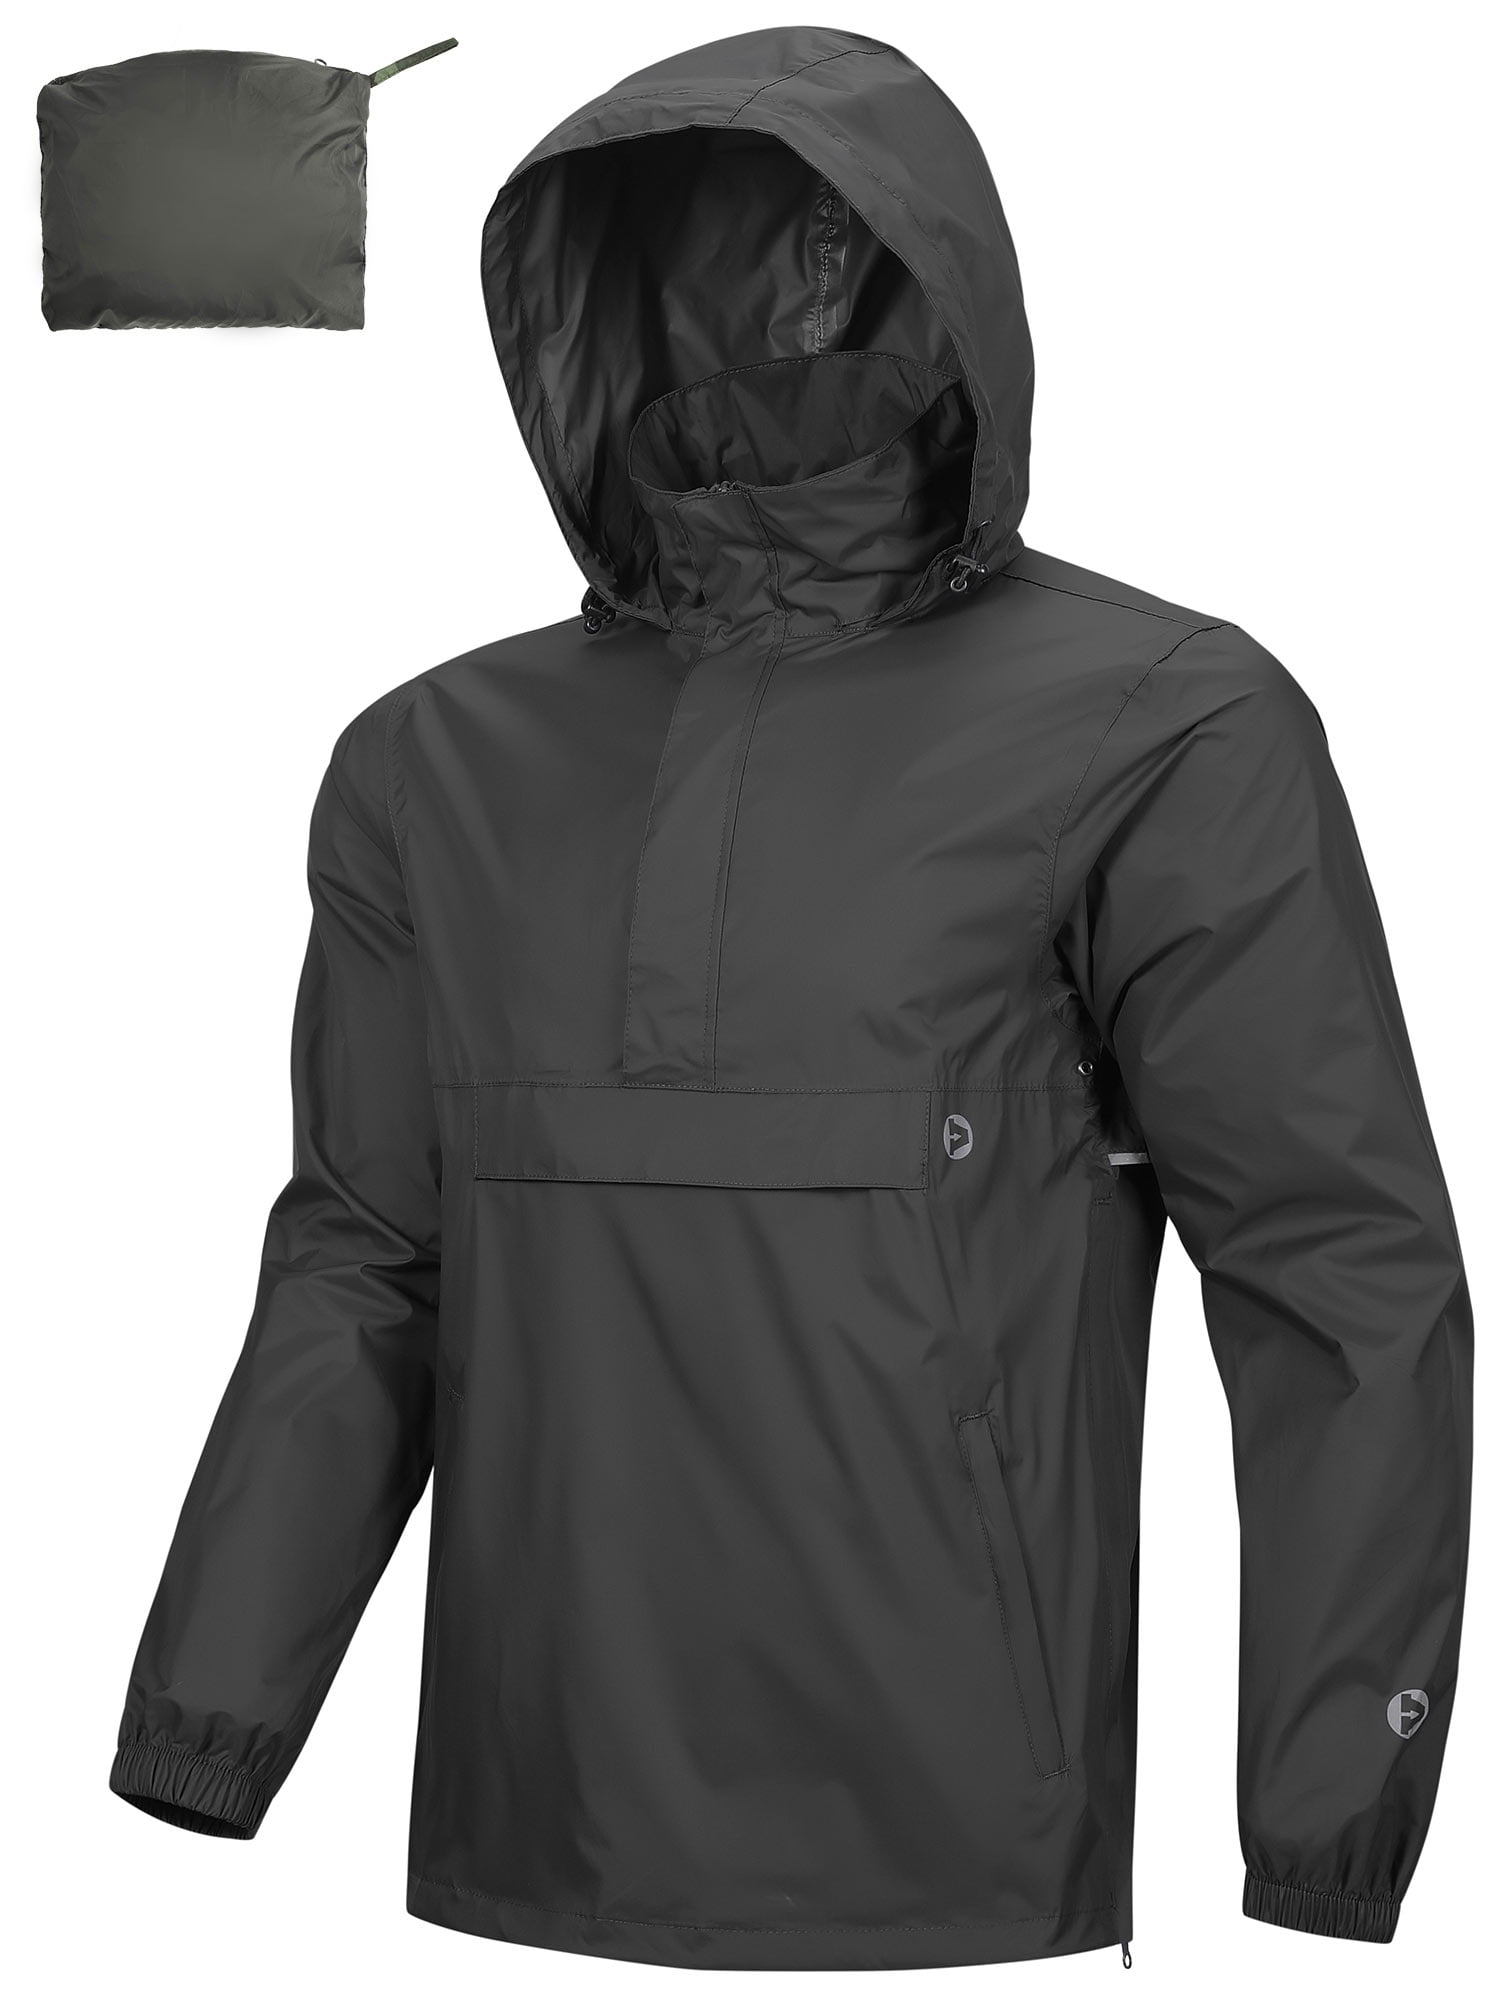 33,000ft Men's Rain Jacket Waterproof Lightweight Packable Rain ...